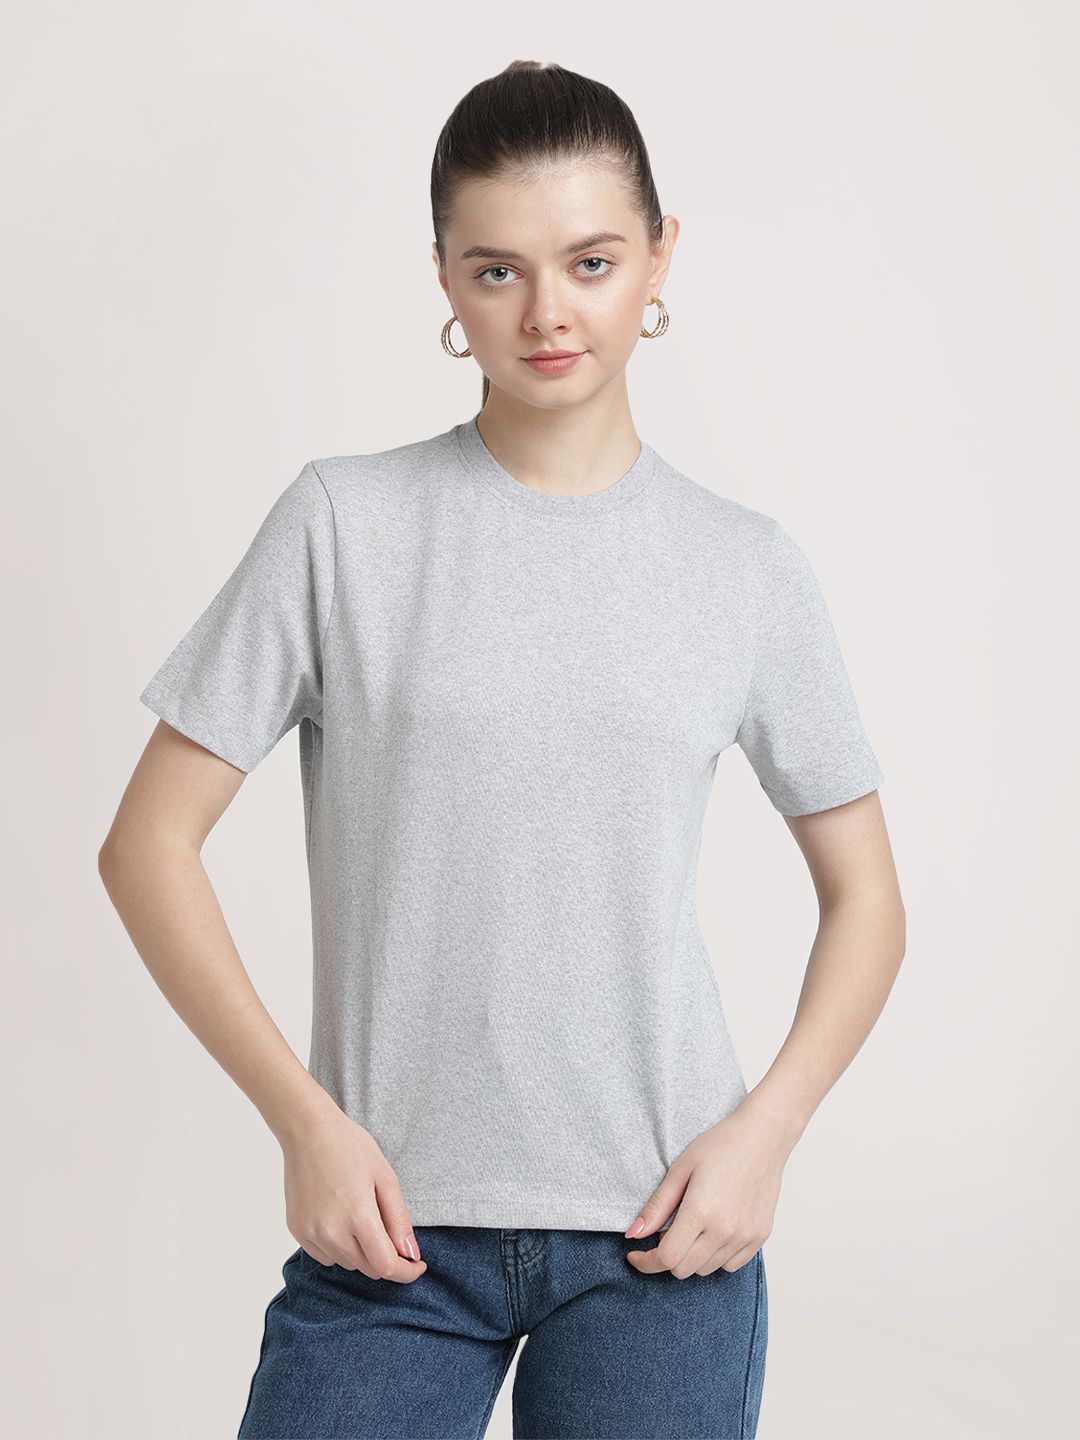     			Bene Kleed Grey Melange Cotton Blend Slim Fit Women's T-Shirt ( Pack of 1 )